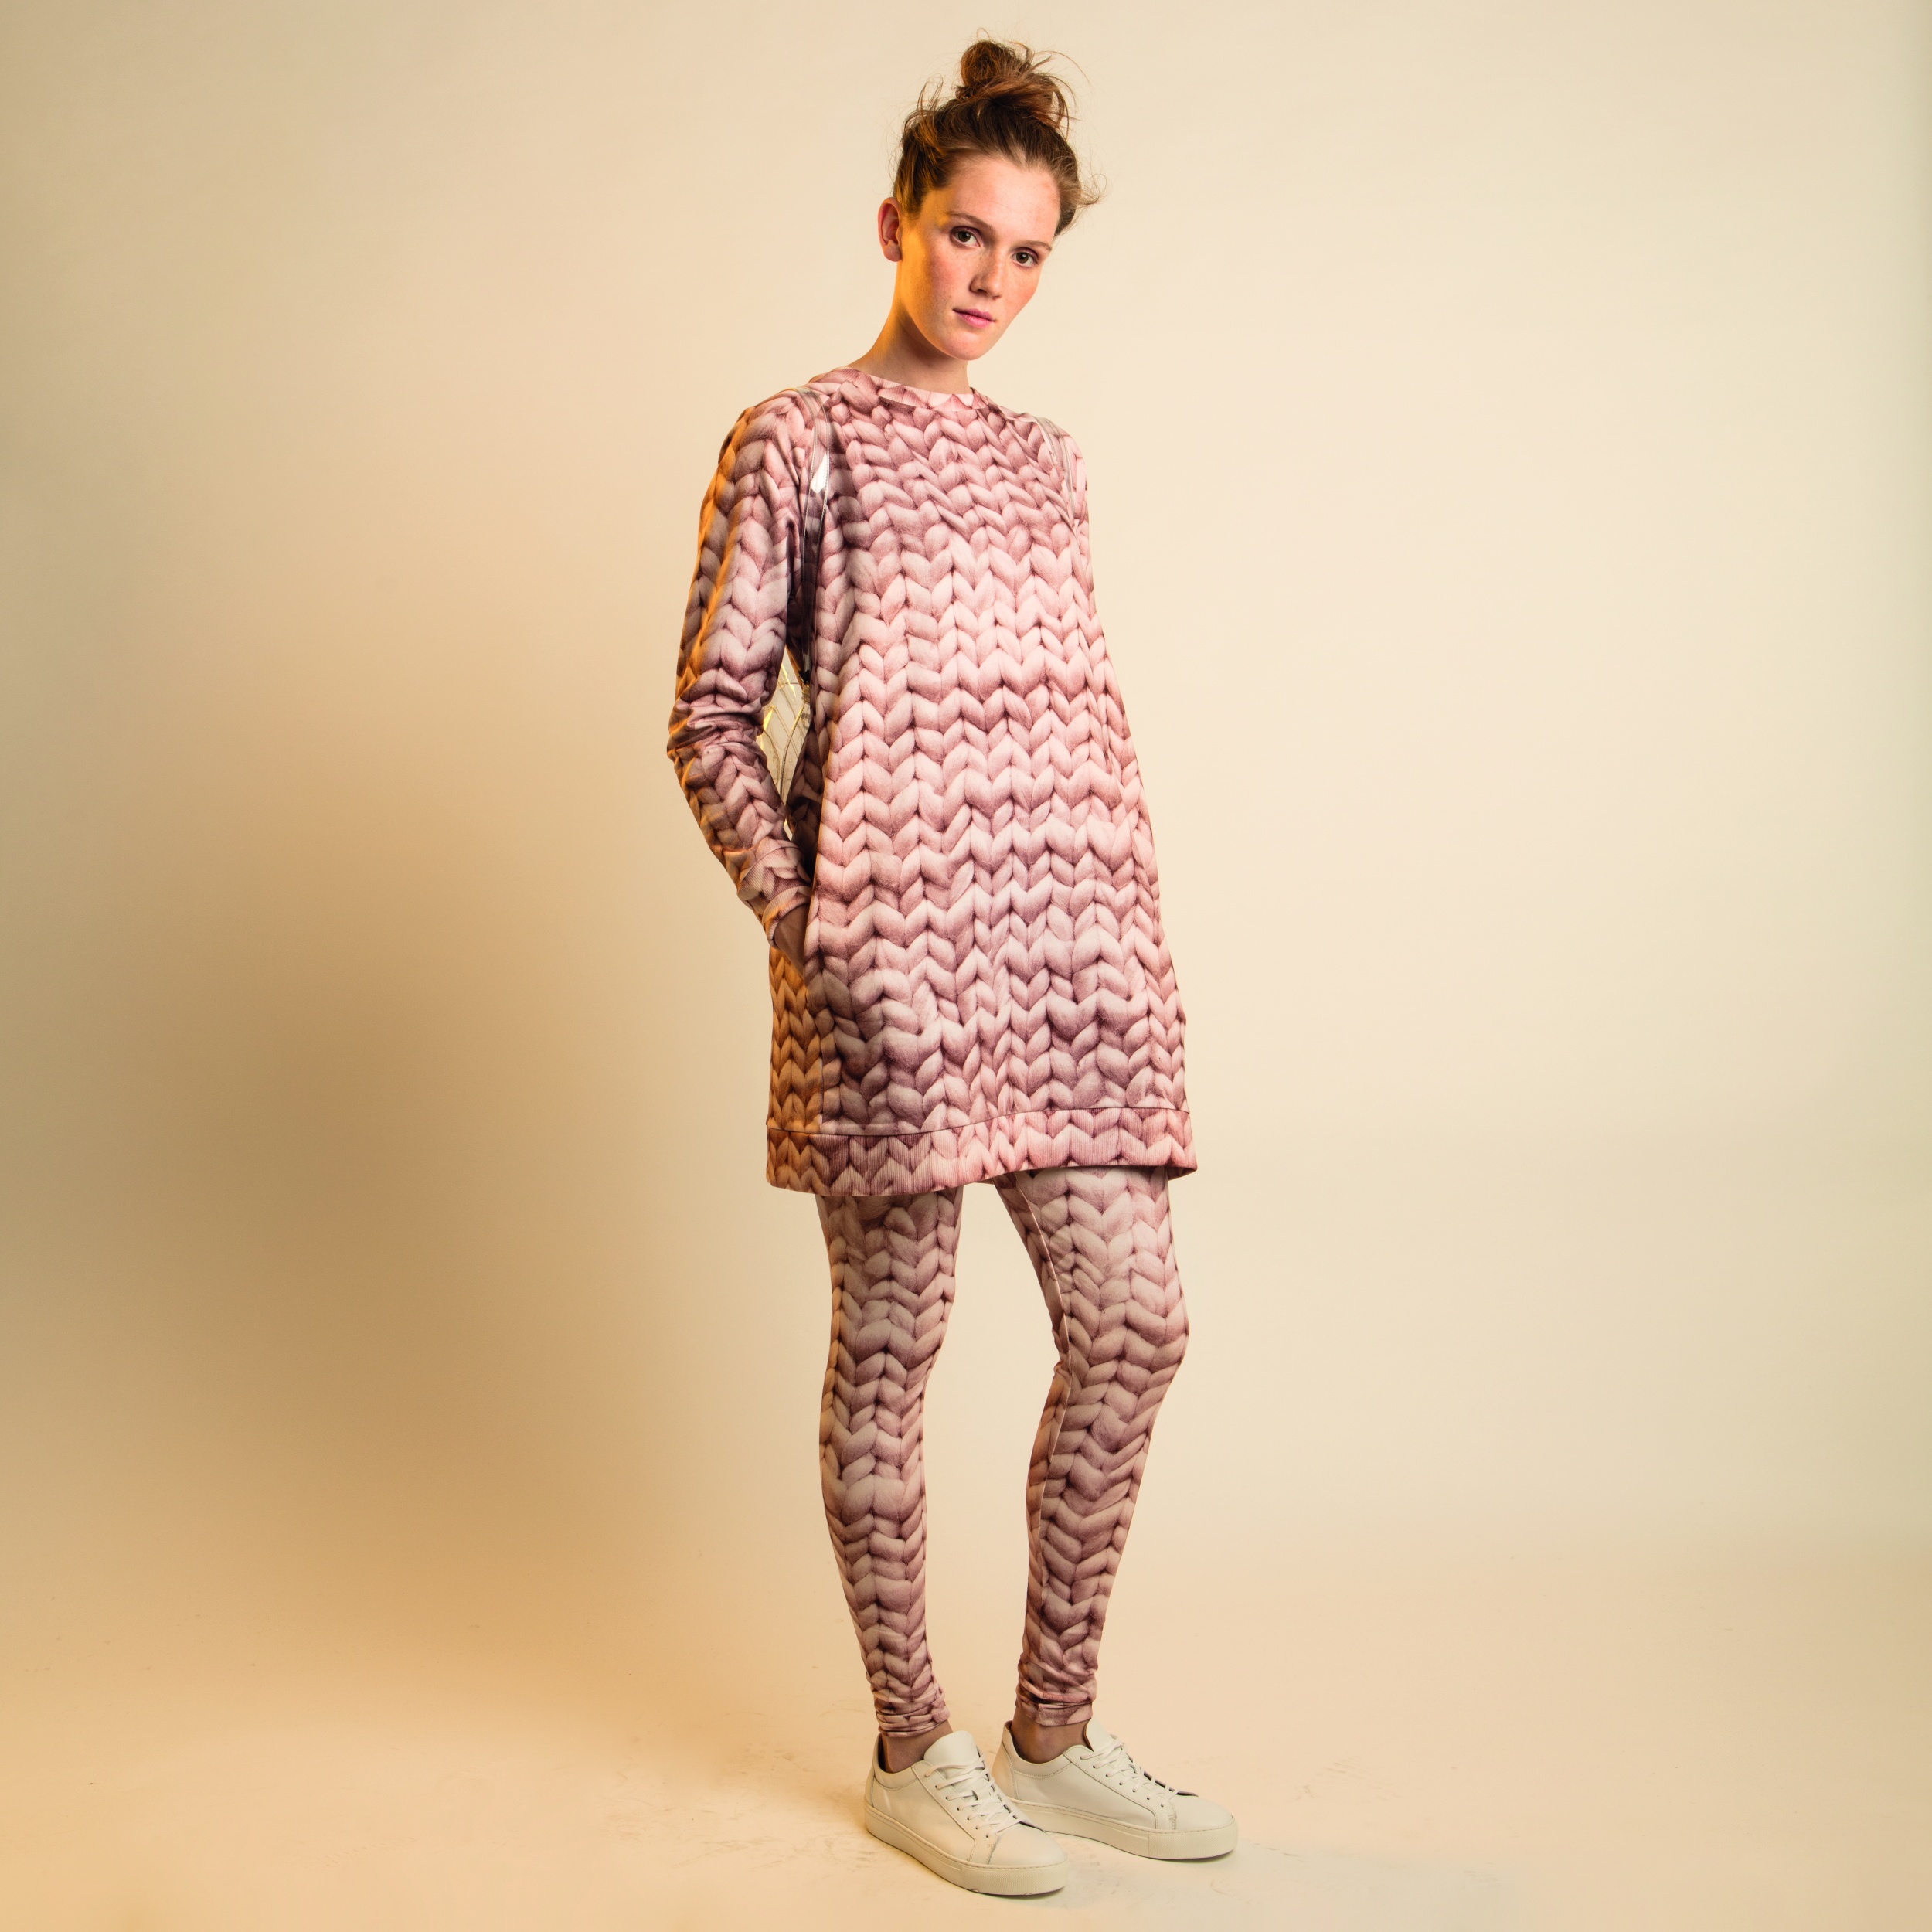 Wonderbaarlijk SNURK pyjama loungewear jurk legging twirre pink dames trendy TU-66